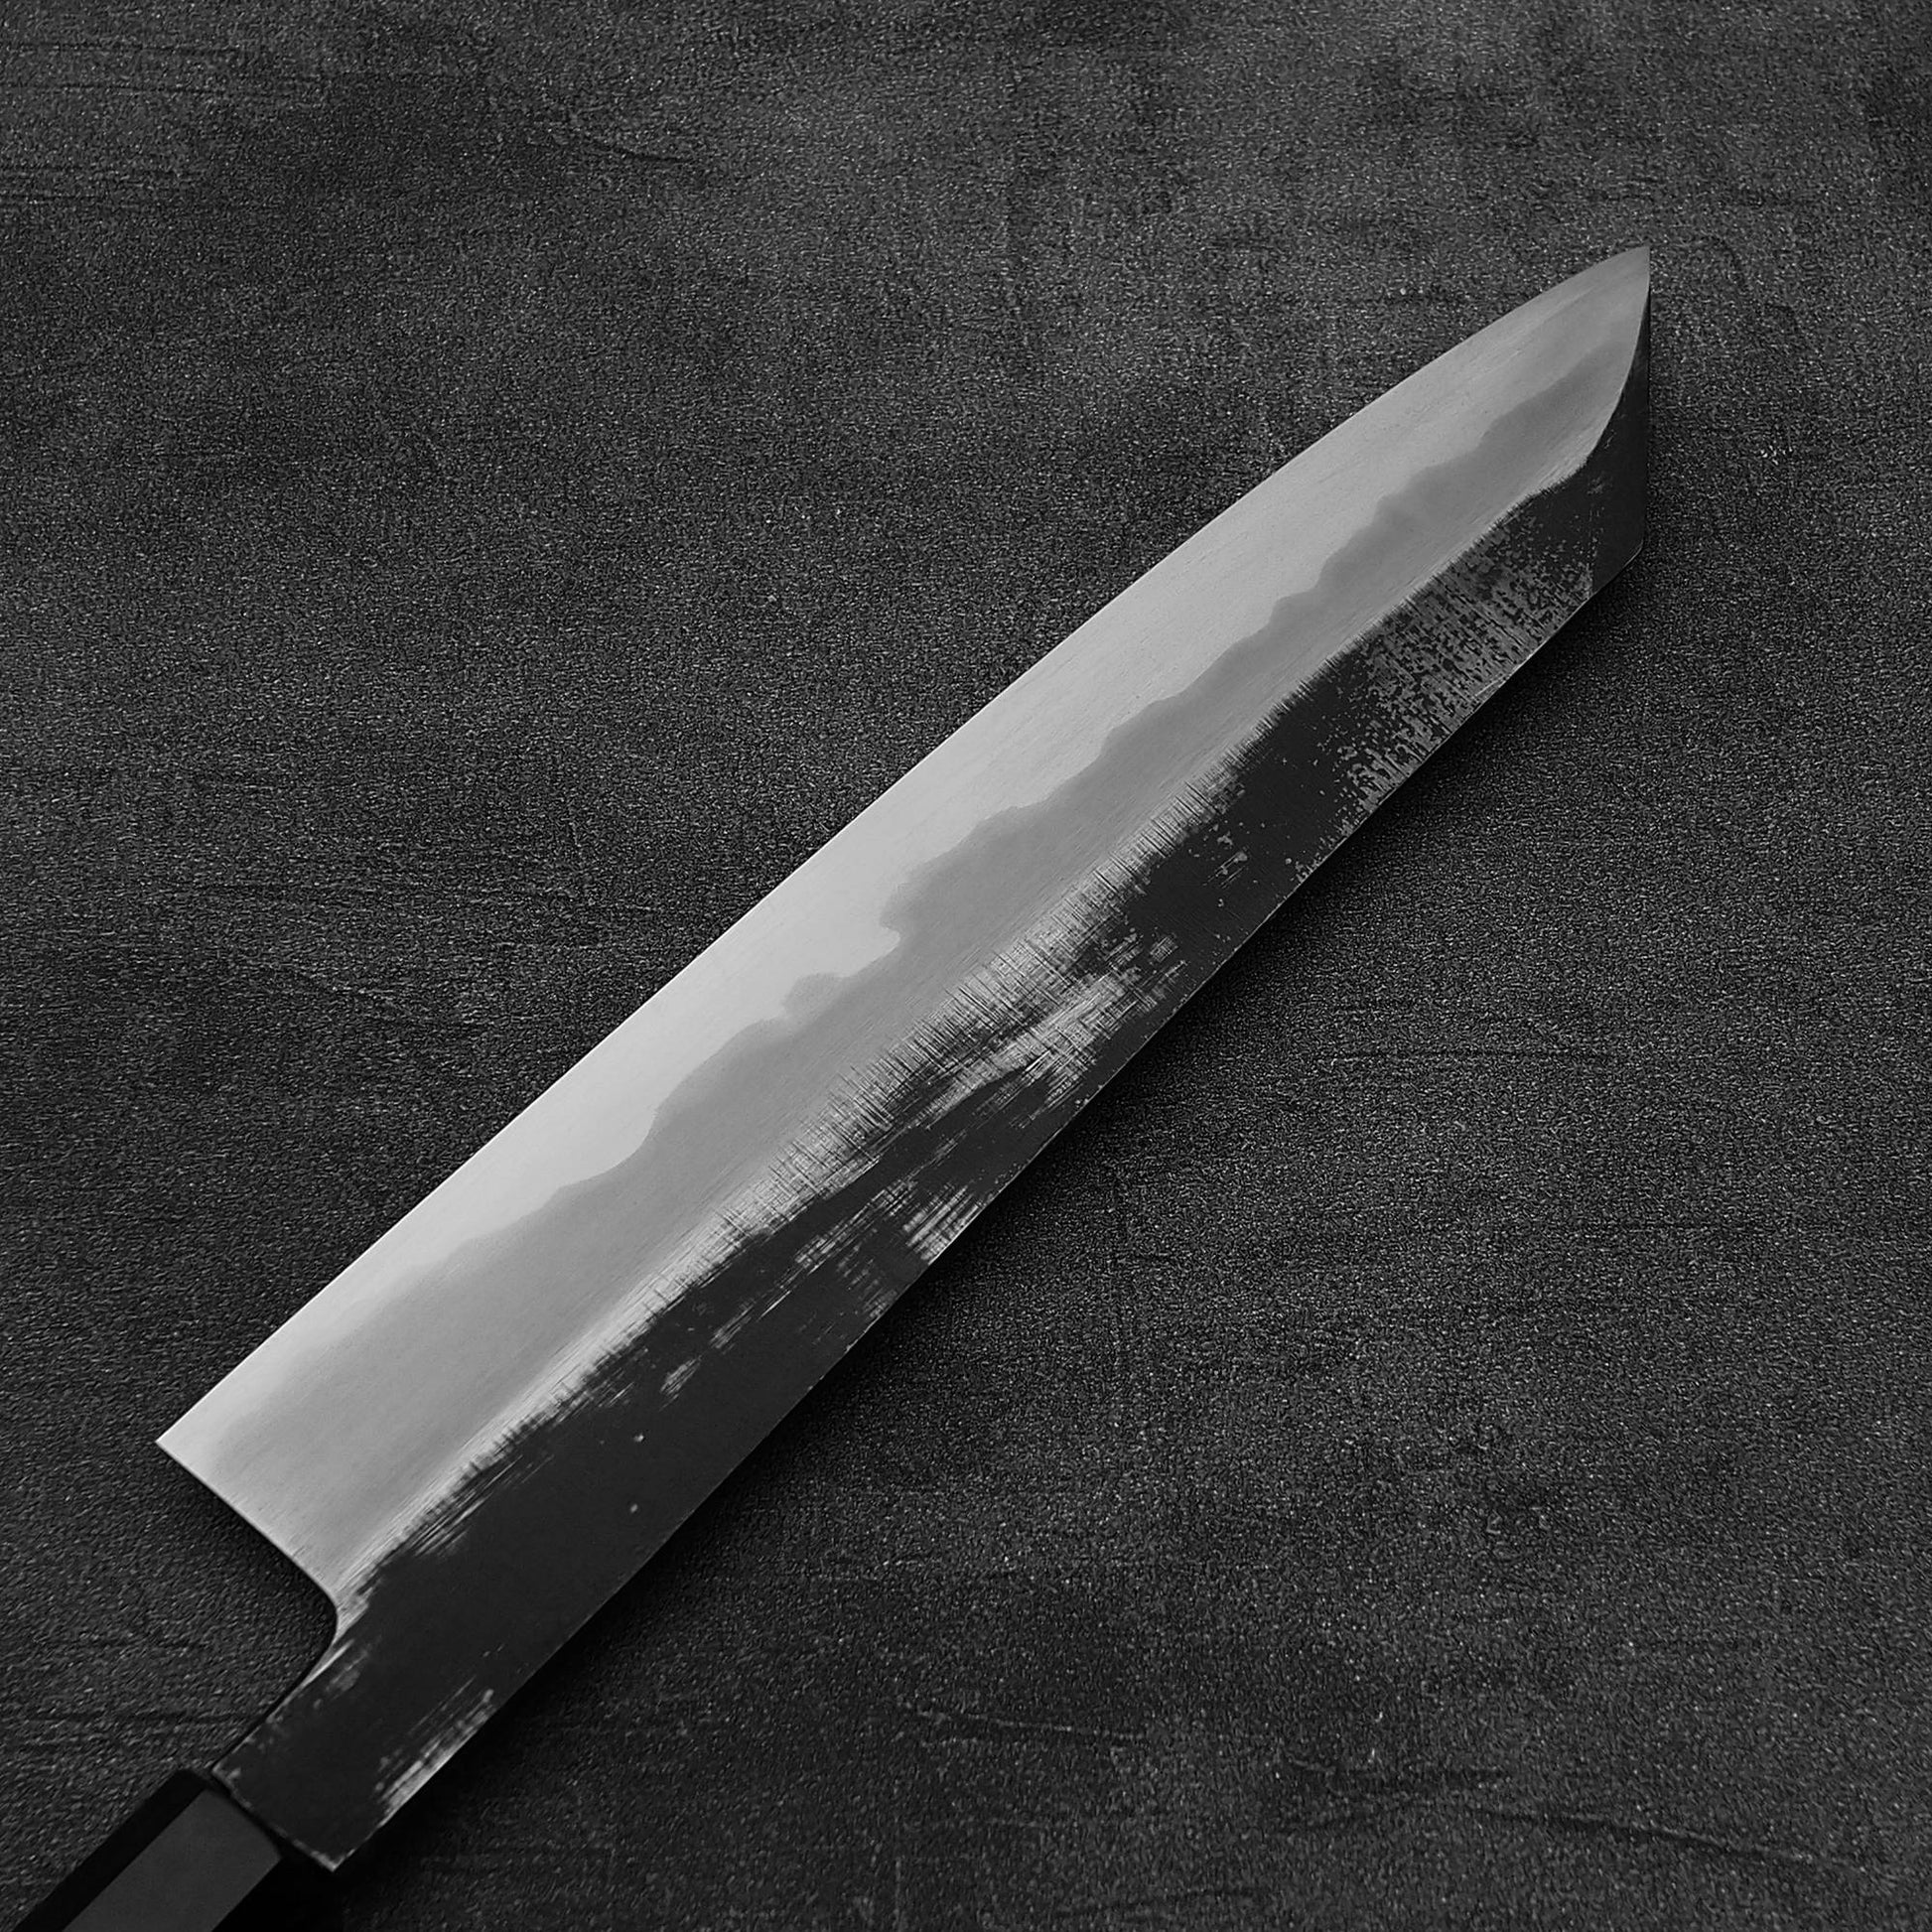 Close up view of the back side of Hatsukokoro Yoake kurouchi aogami#1 kiritsuke gyuto knife